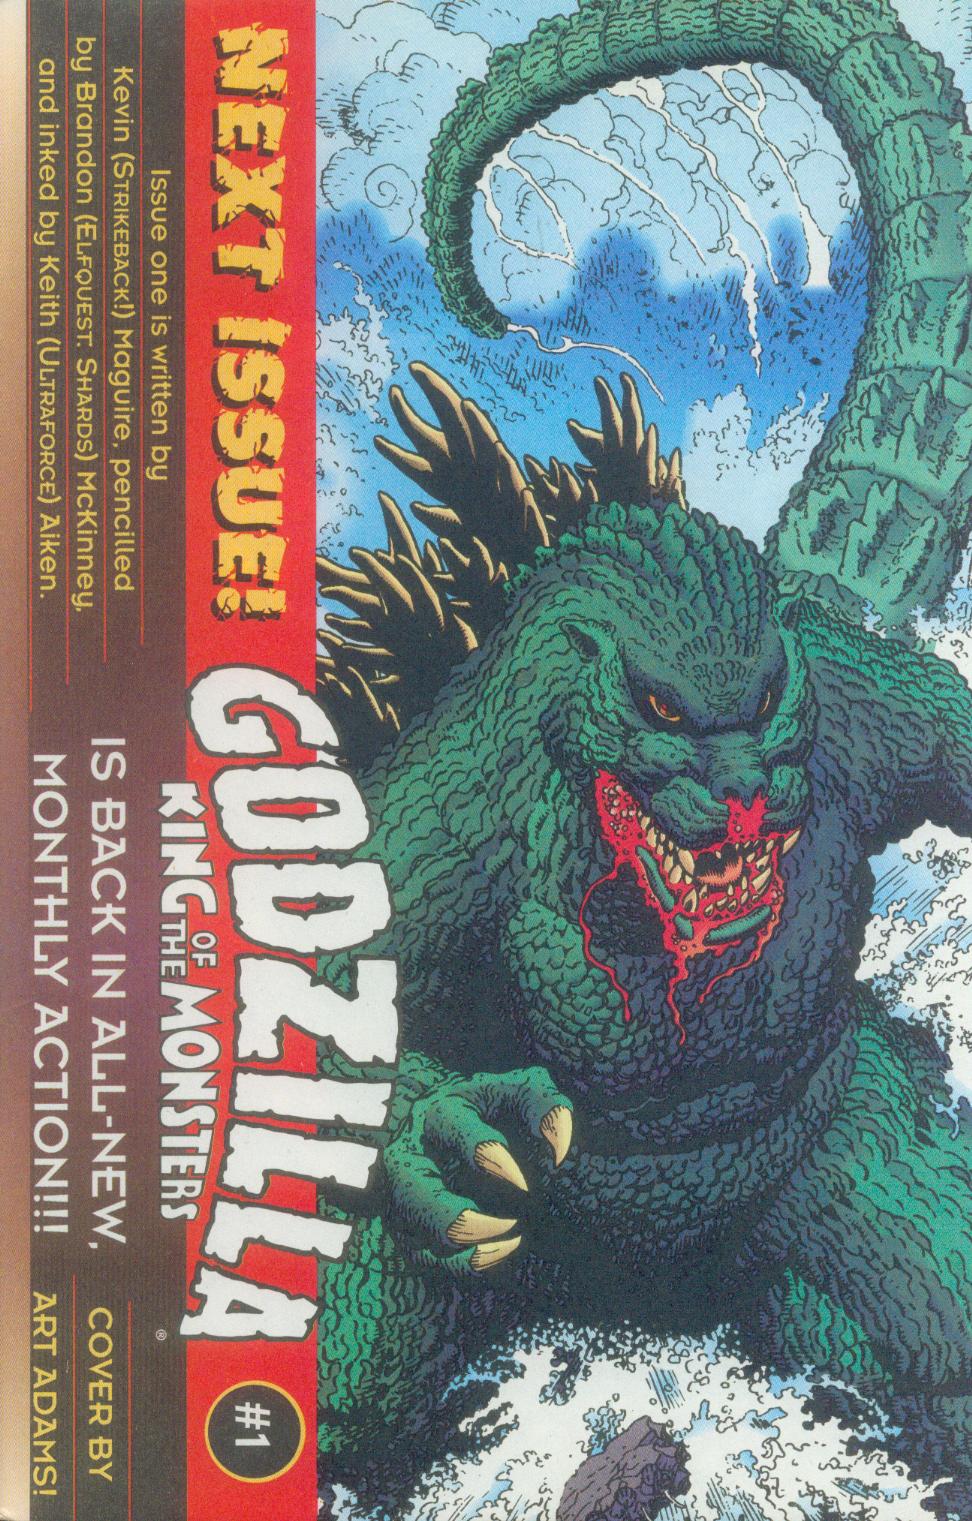 Godzilla (1995) Issue #0 #1 - English 29